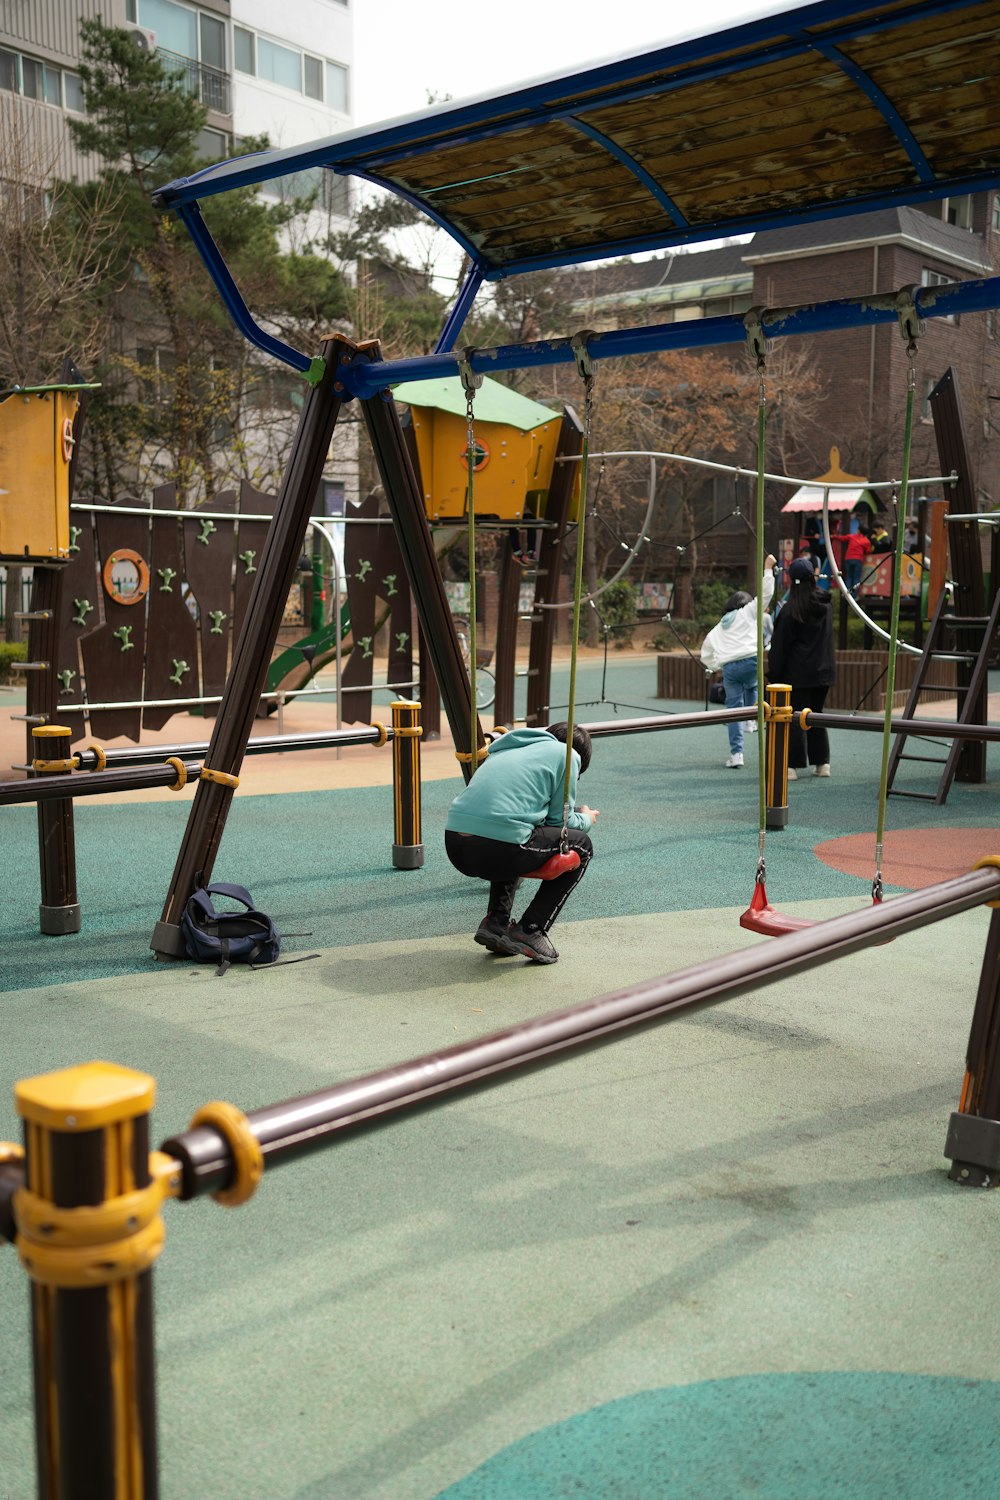 people sitting on playground swing during daytime